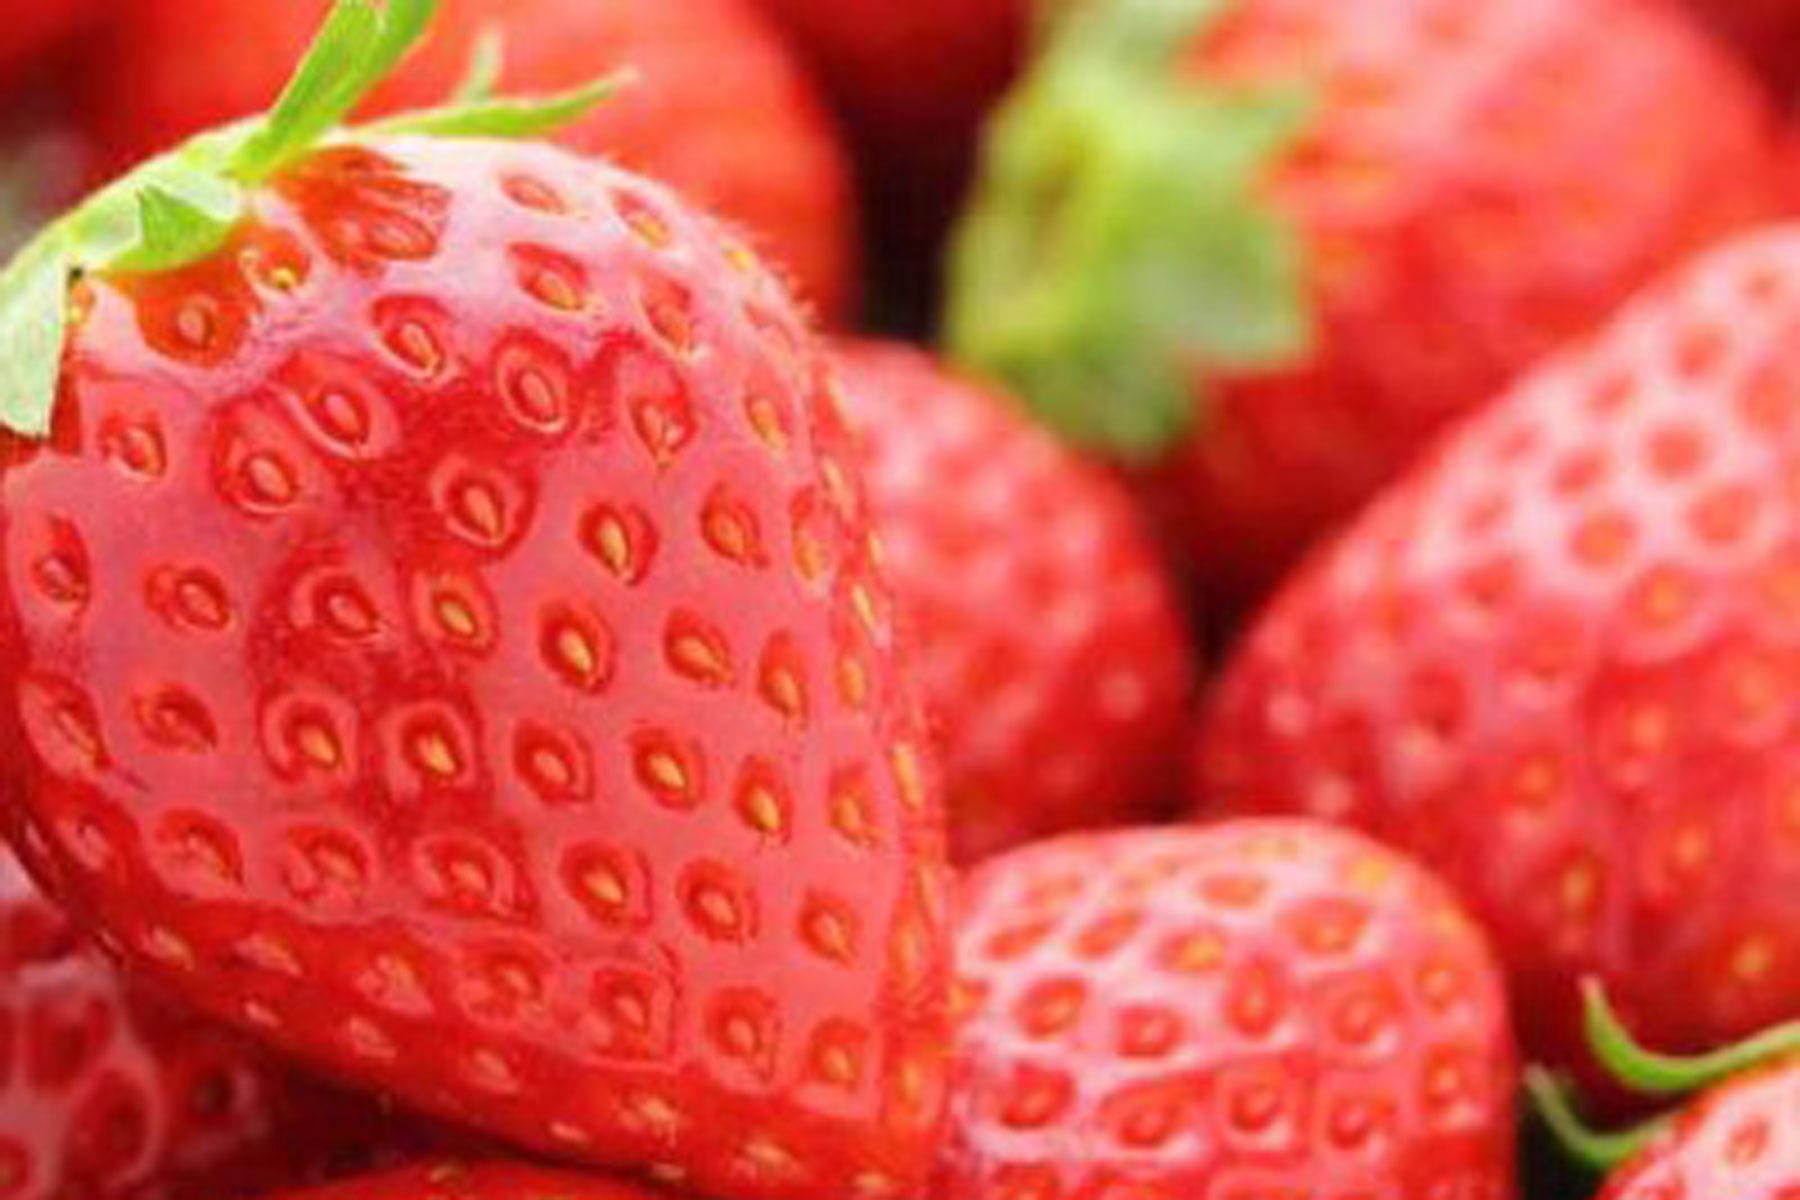 Stehly Farms Organics farm tour & strawberry upick Berry Good Food